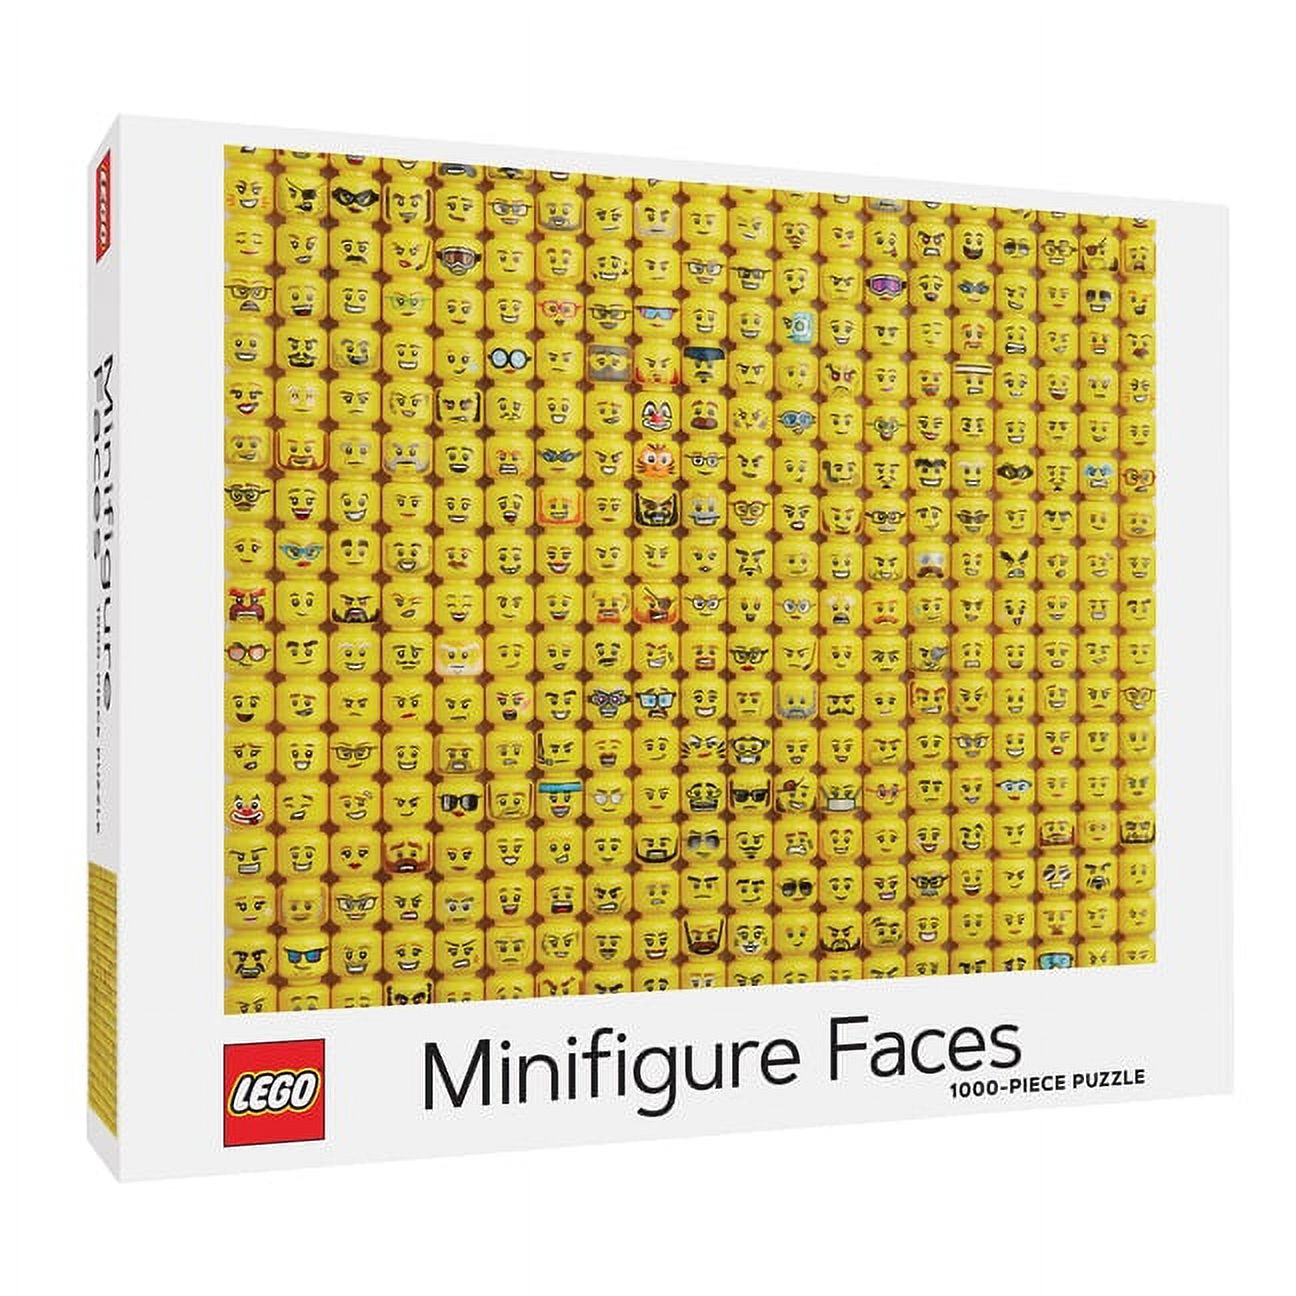 Lego: LEGO Minifigure Faces 1000-Piece Puzzle (Jigsaw) - image 1 of 3